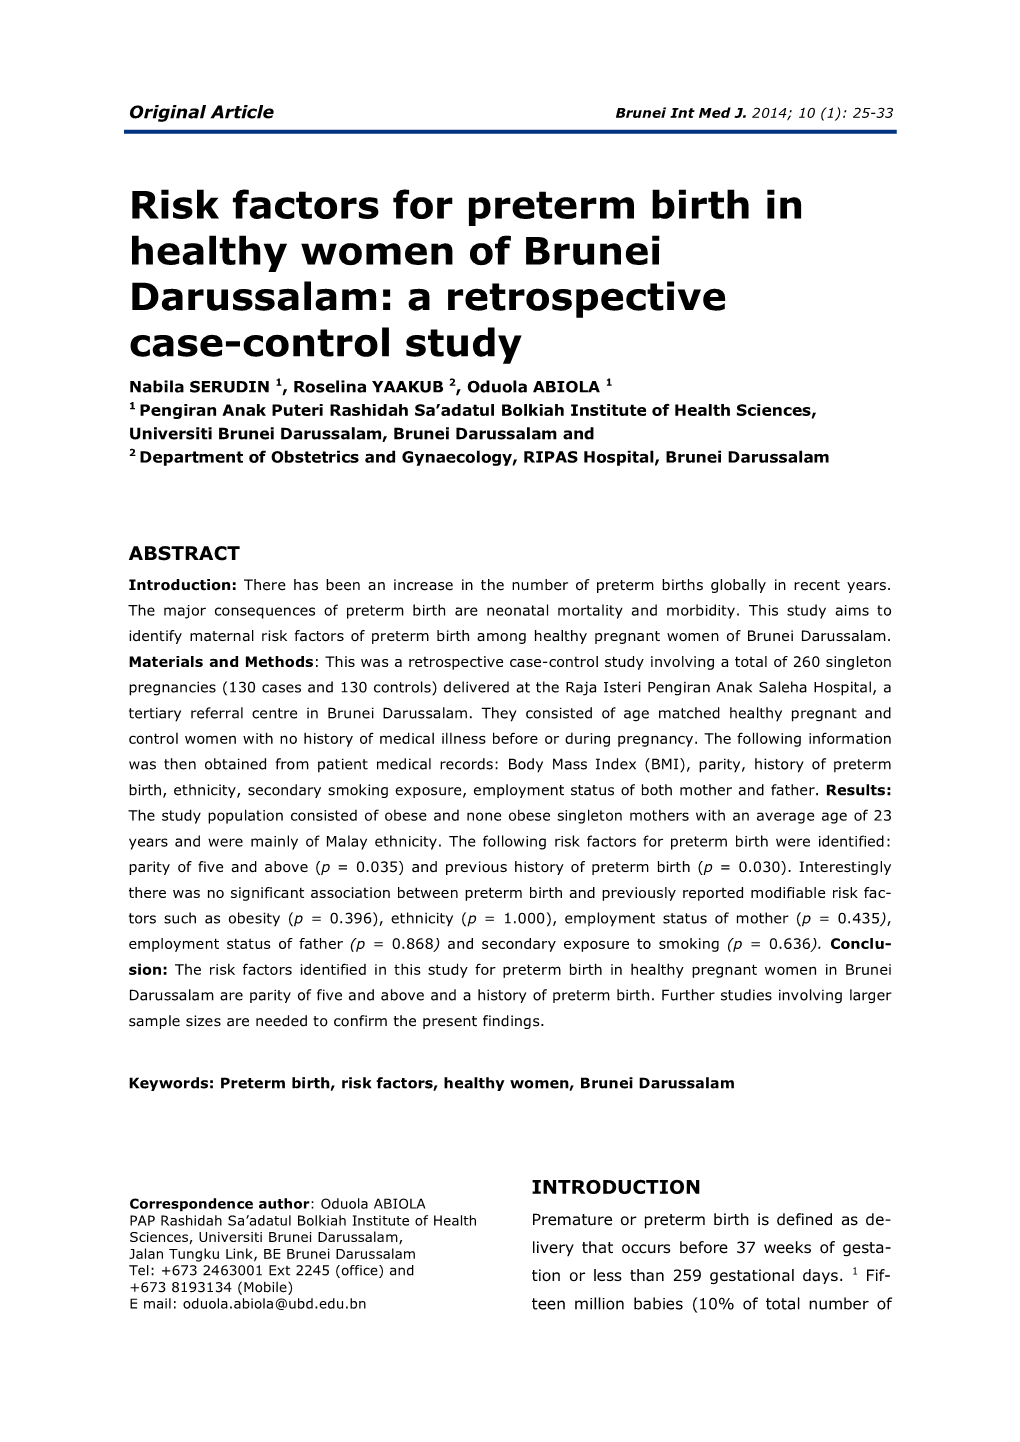 Risk Factors for Preterm Birth in Healthy Women of Brunei Darussalam: a Retrospective Case-Control Study